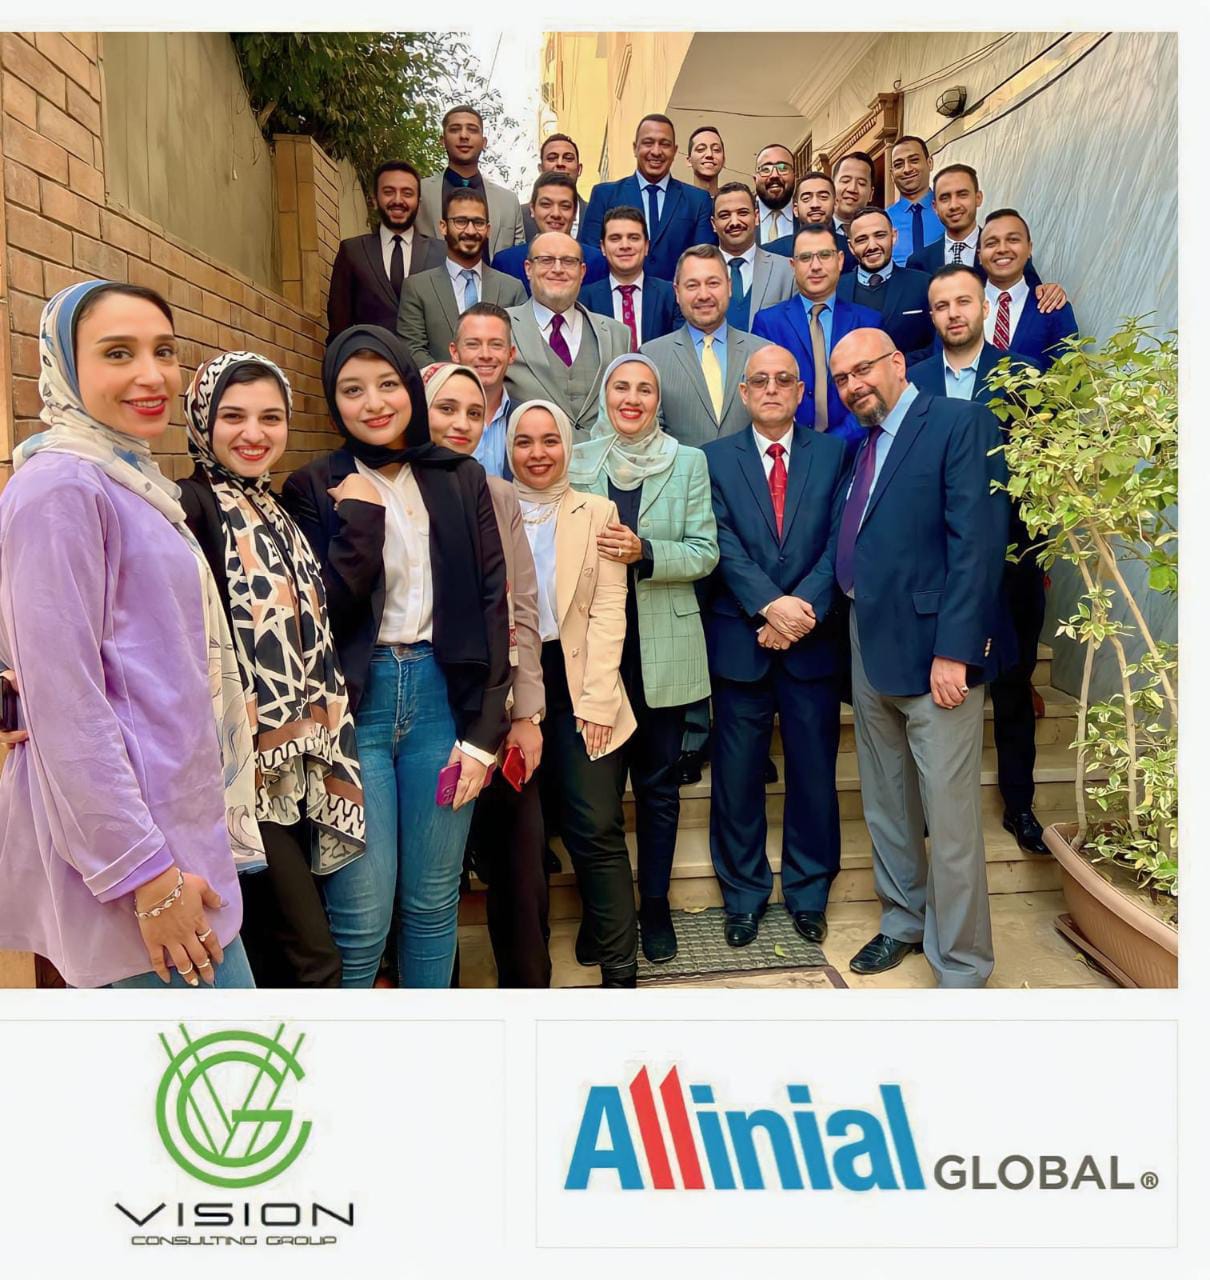 Allinial Global Management Team Visit